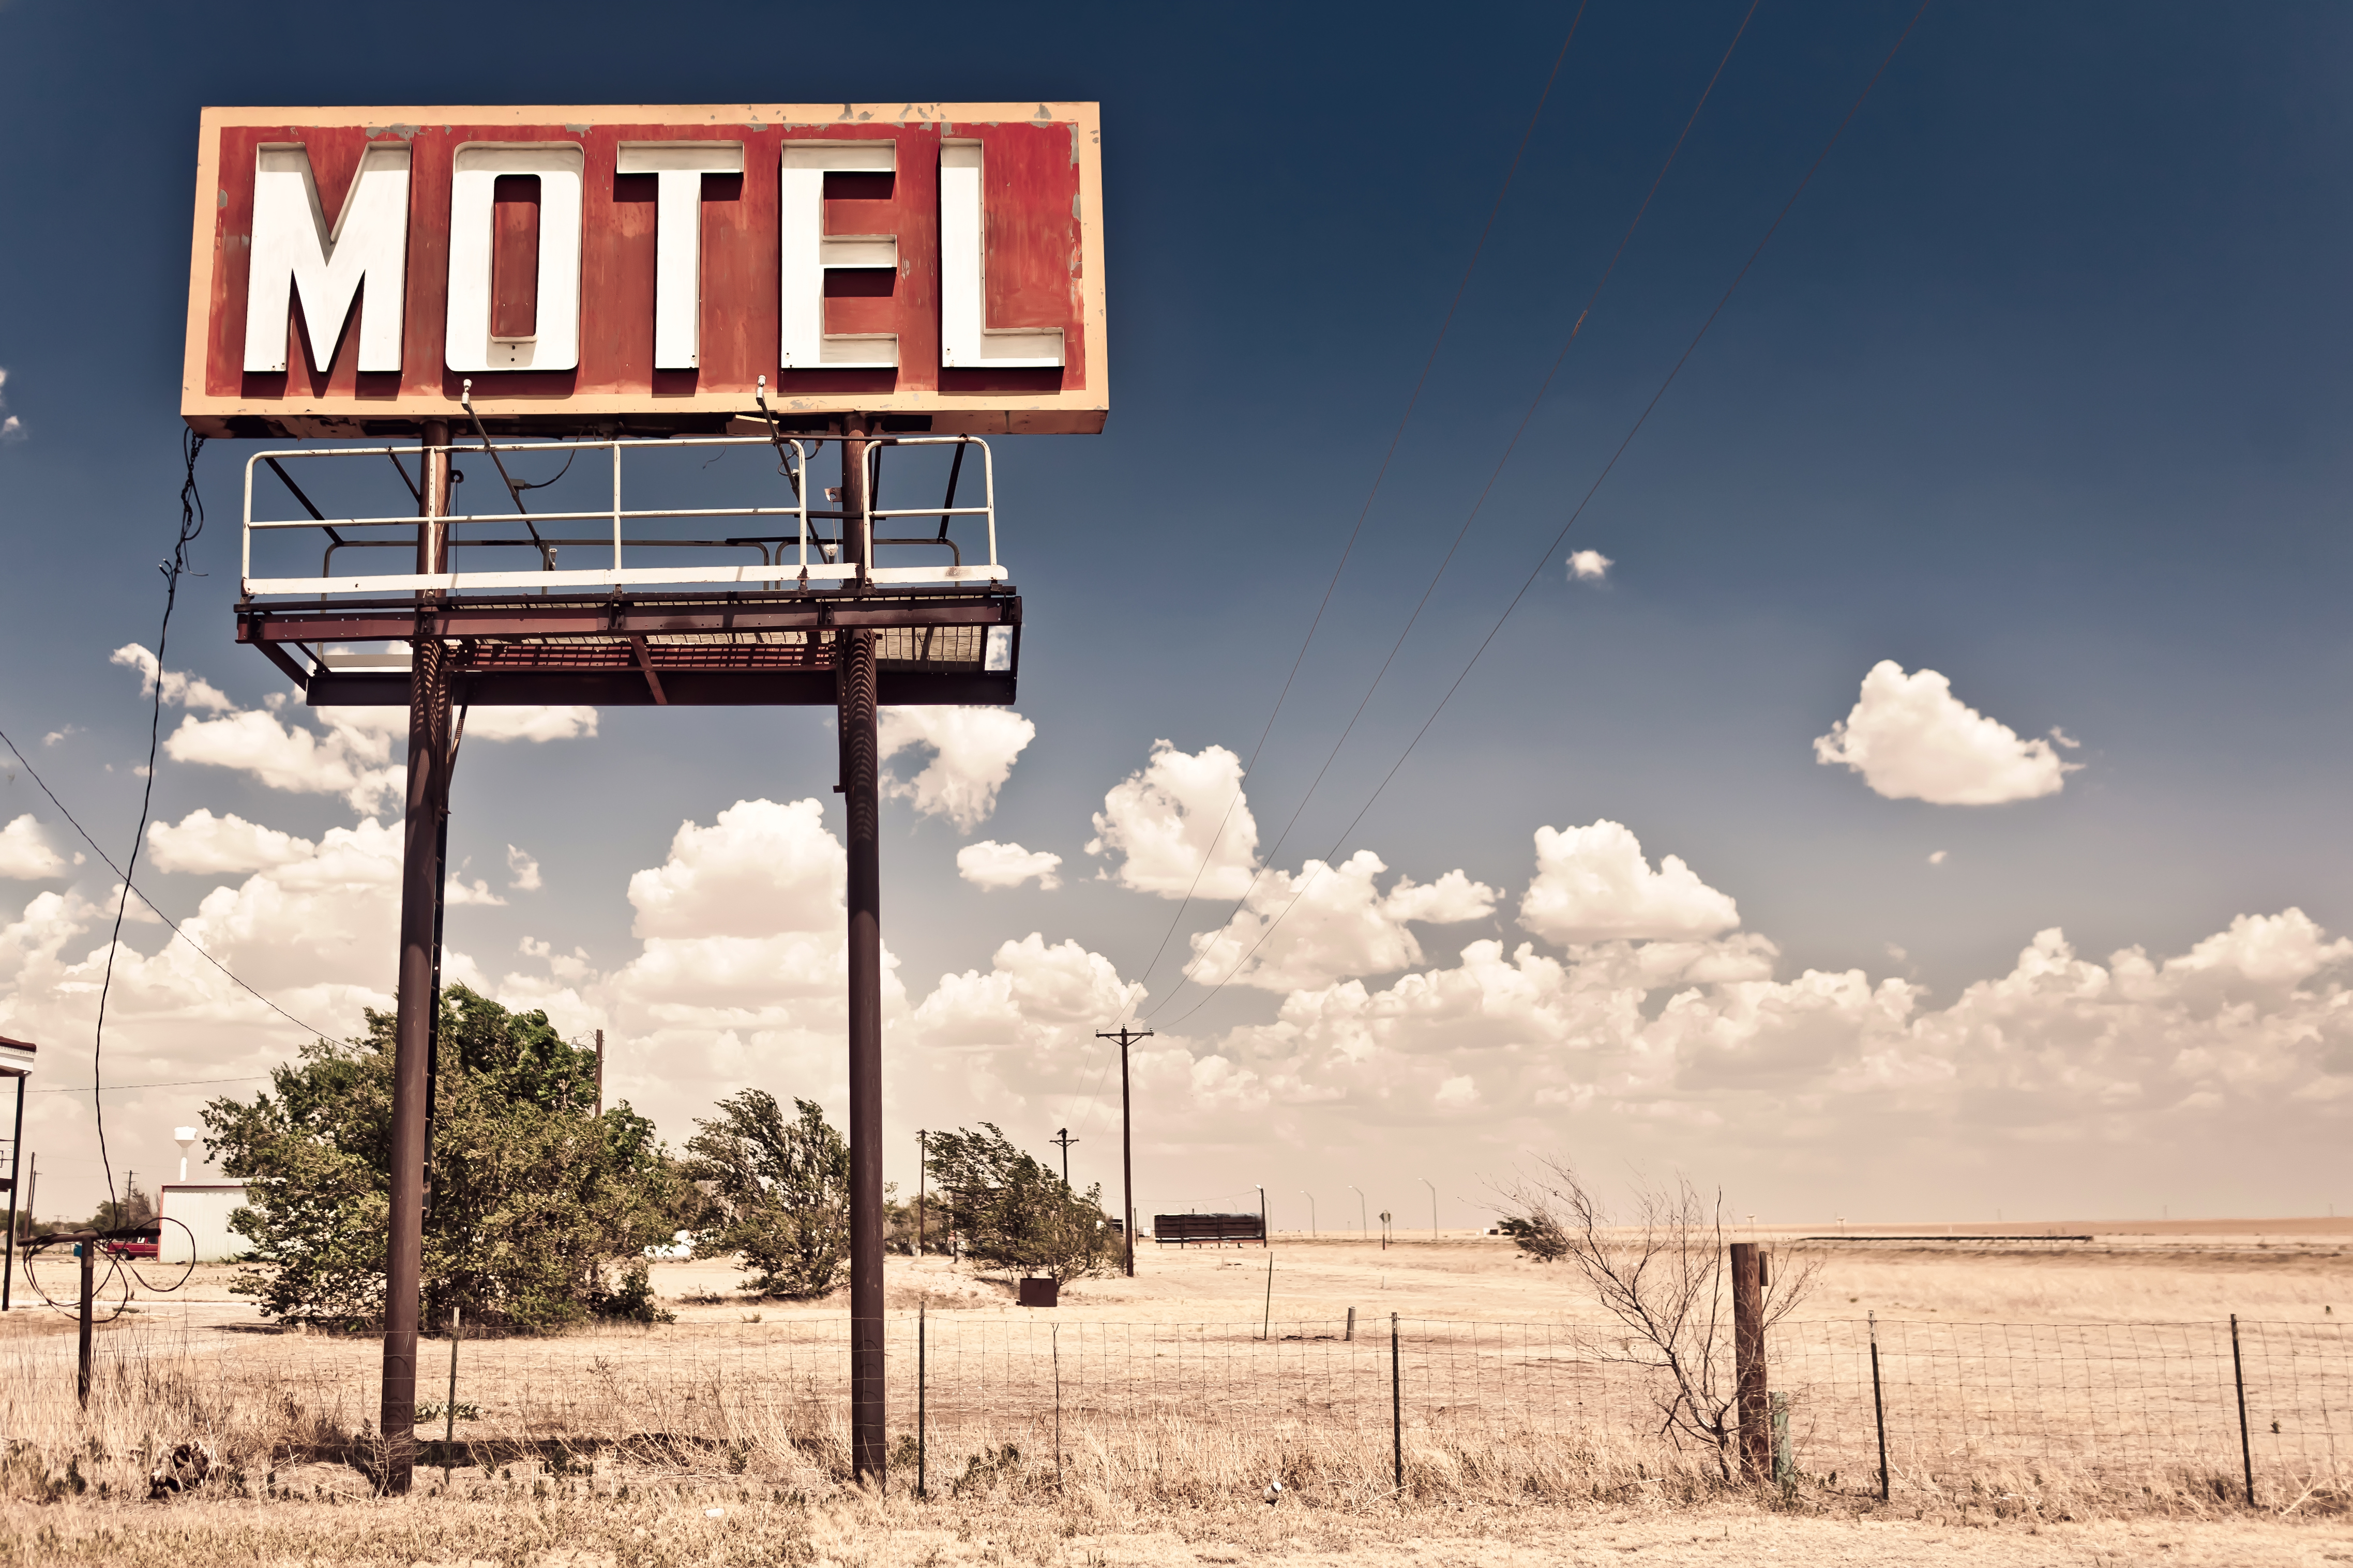 Old motel sign. | Source: Shutterstock